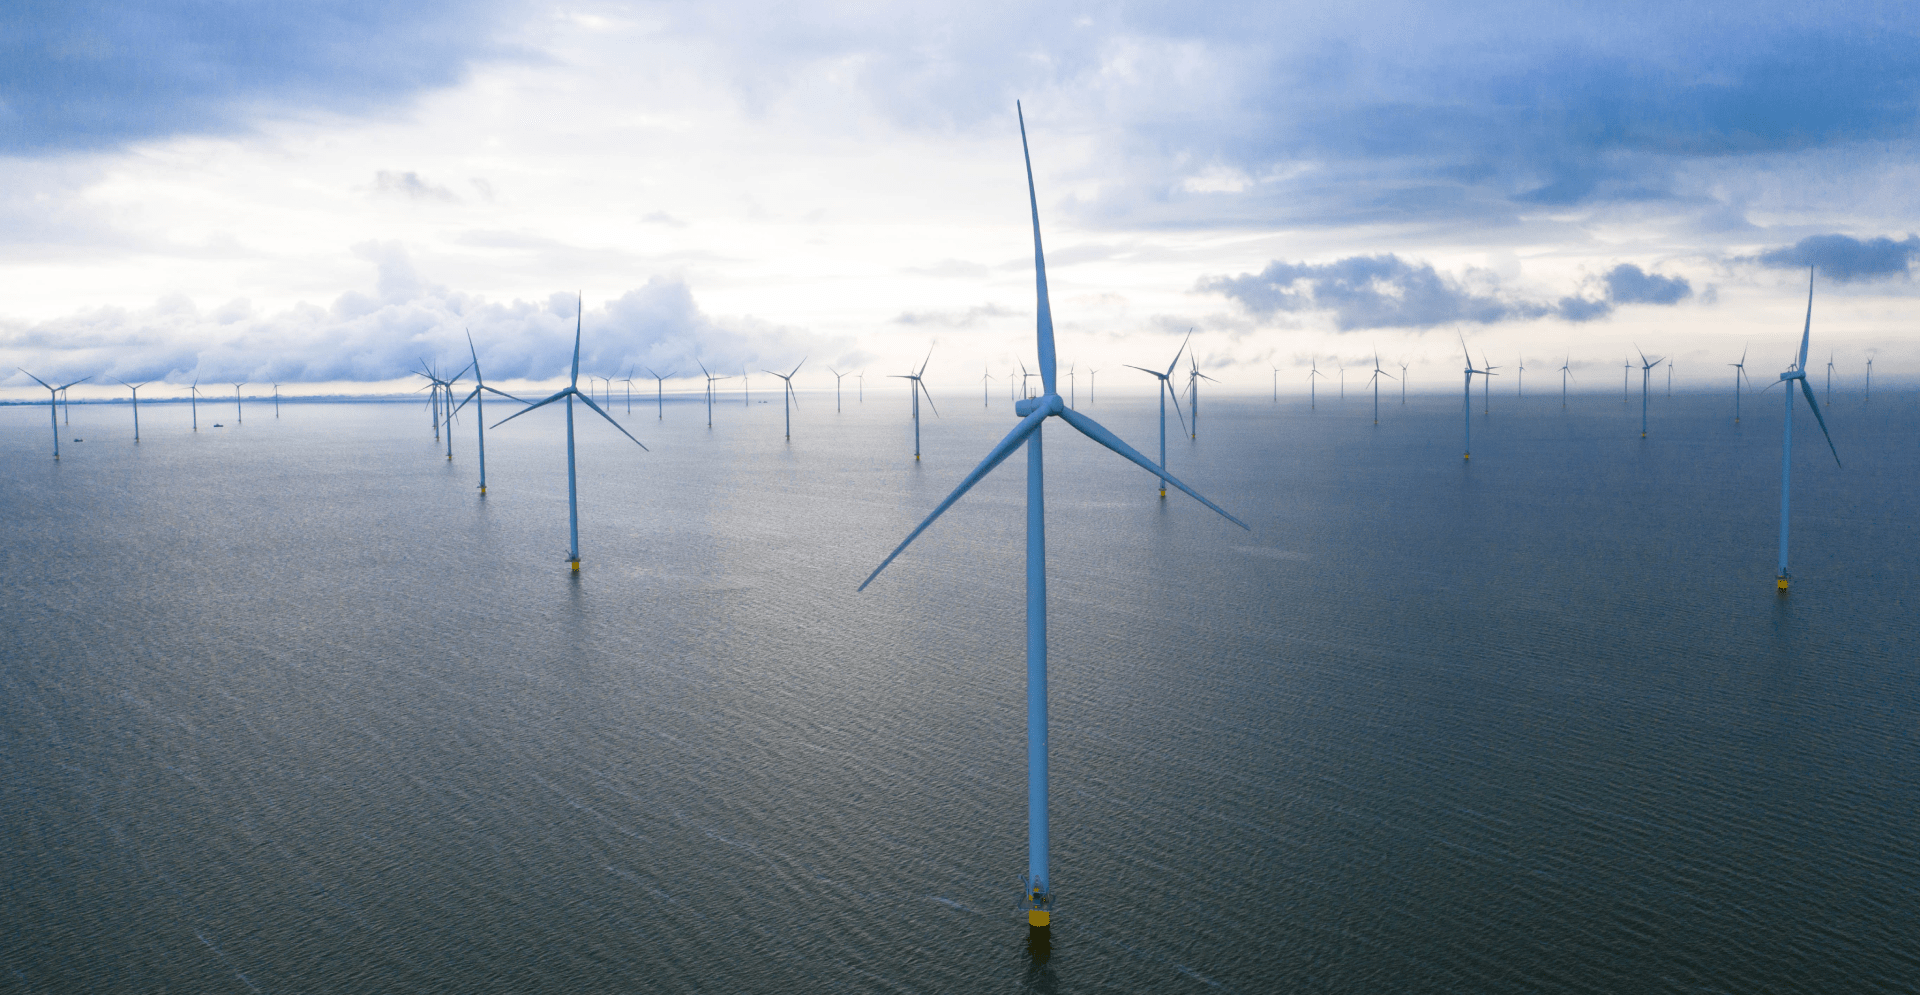 Renewable energy using wind turbines